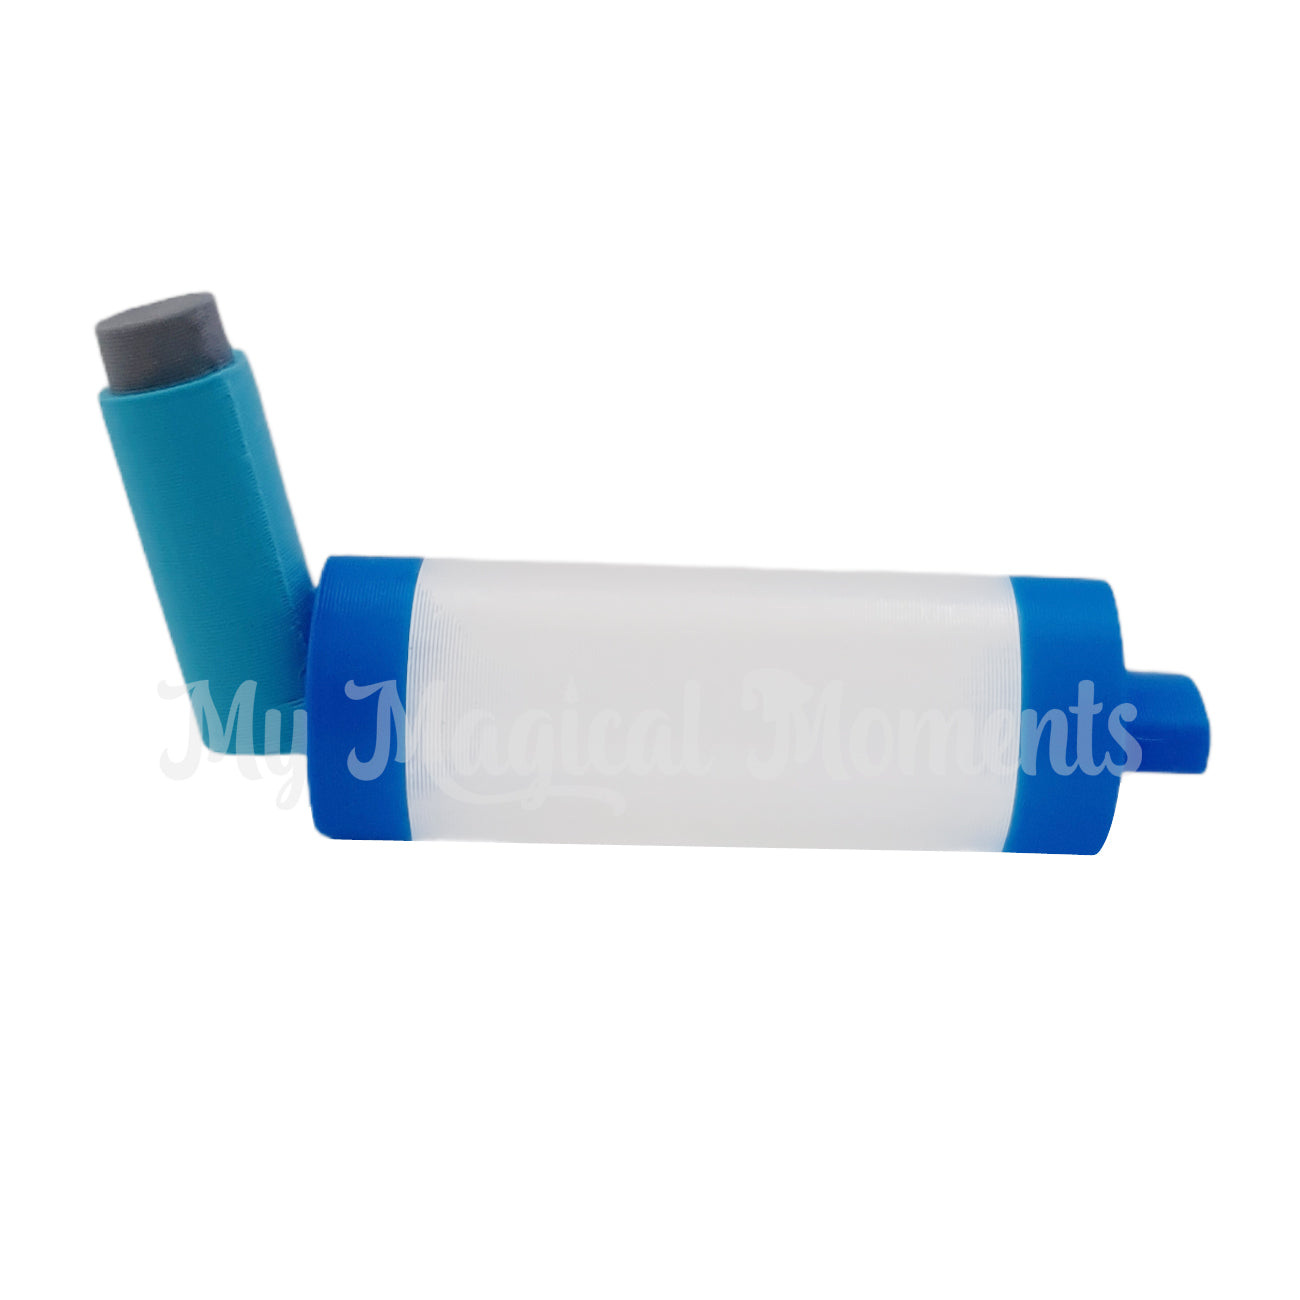 Miniature asthma puffer . elf sized inhaler in the blue spacer